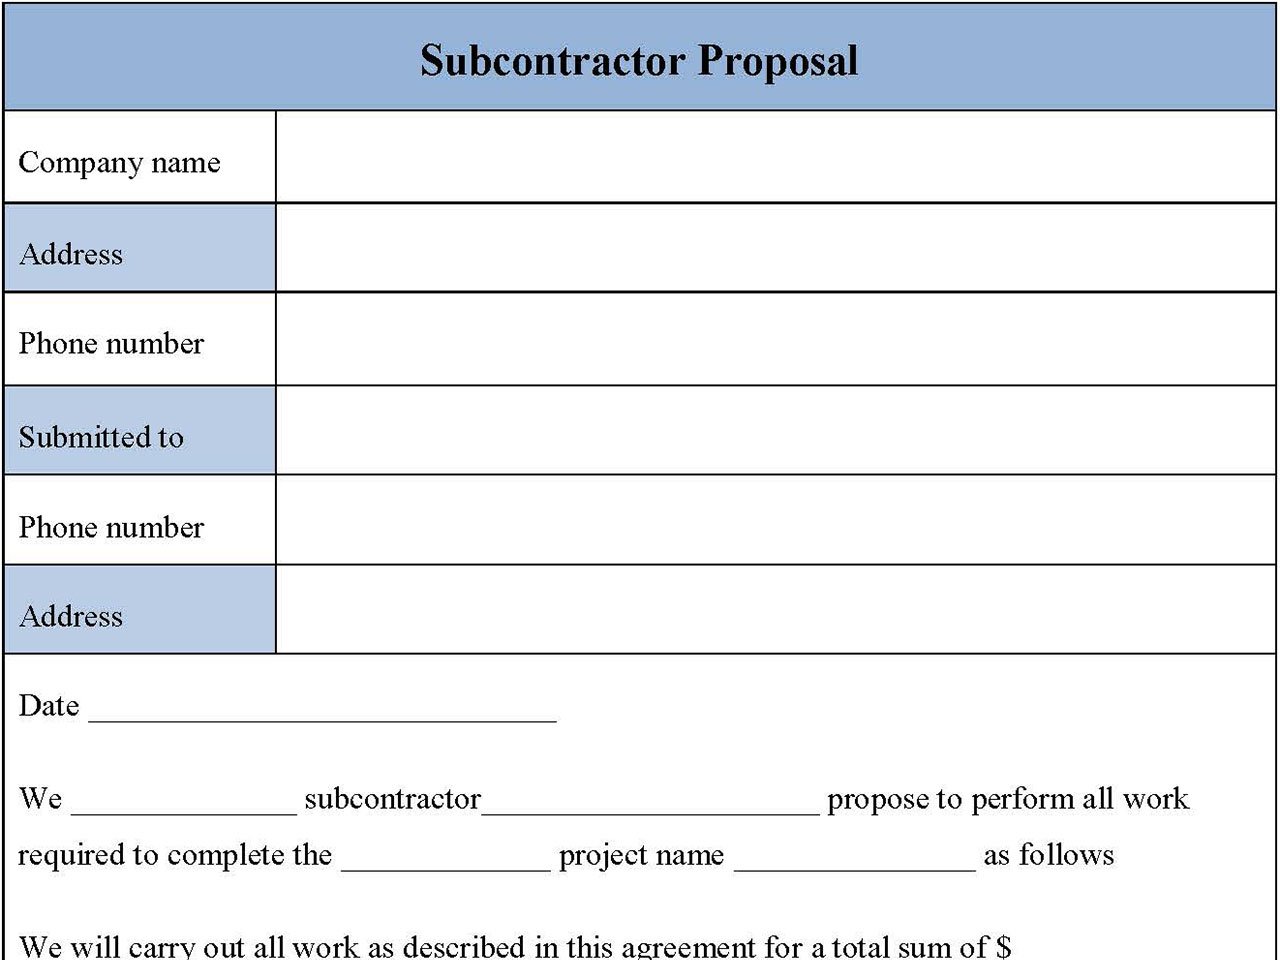 Subcontractor Proposal Form